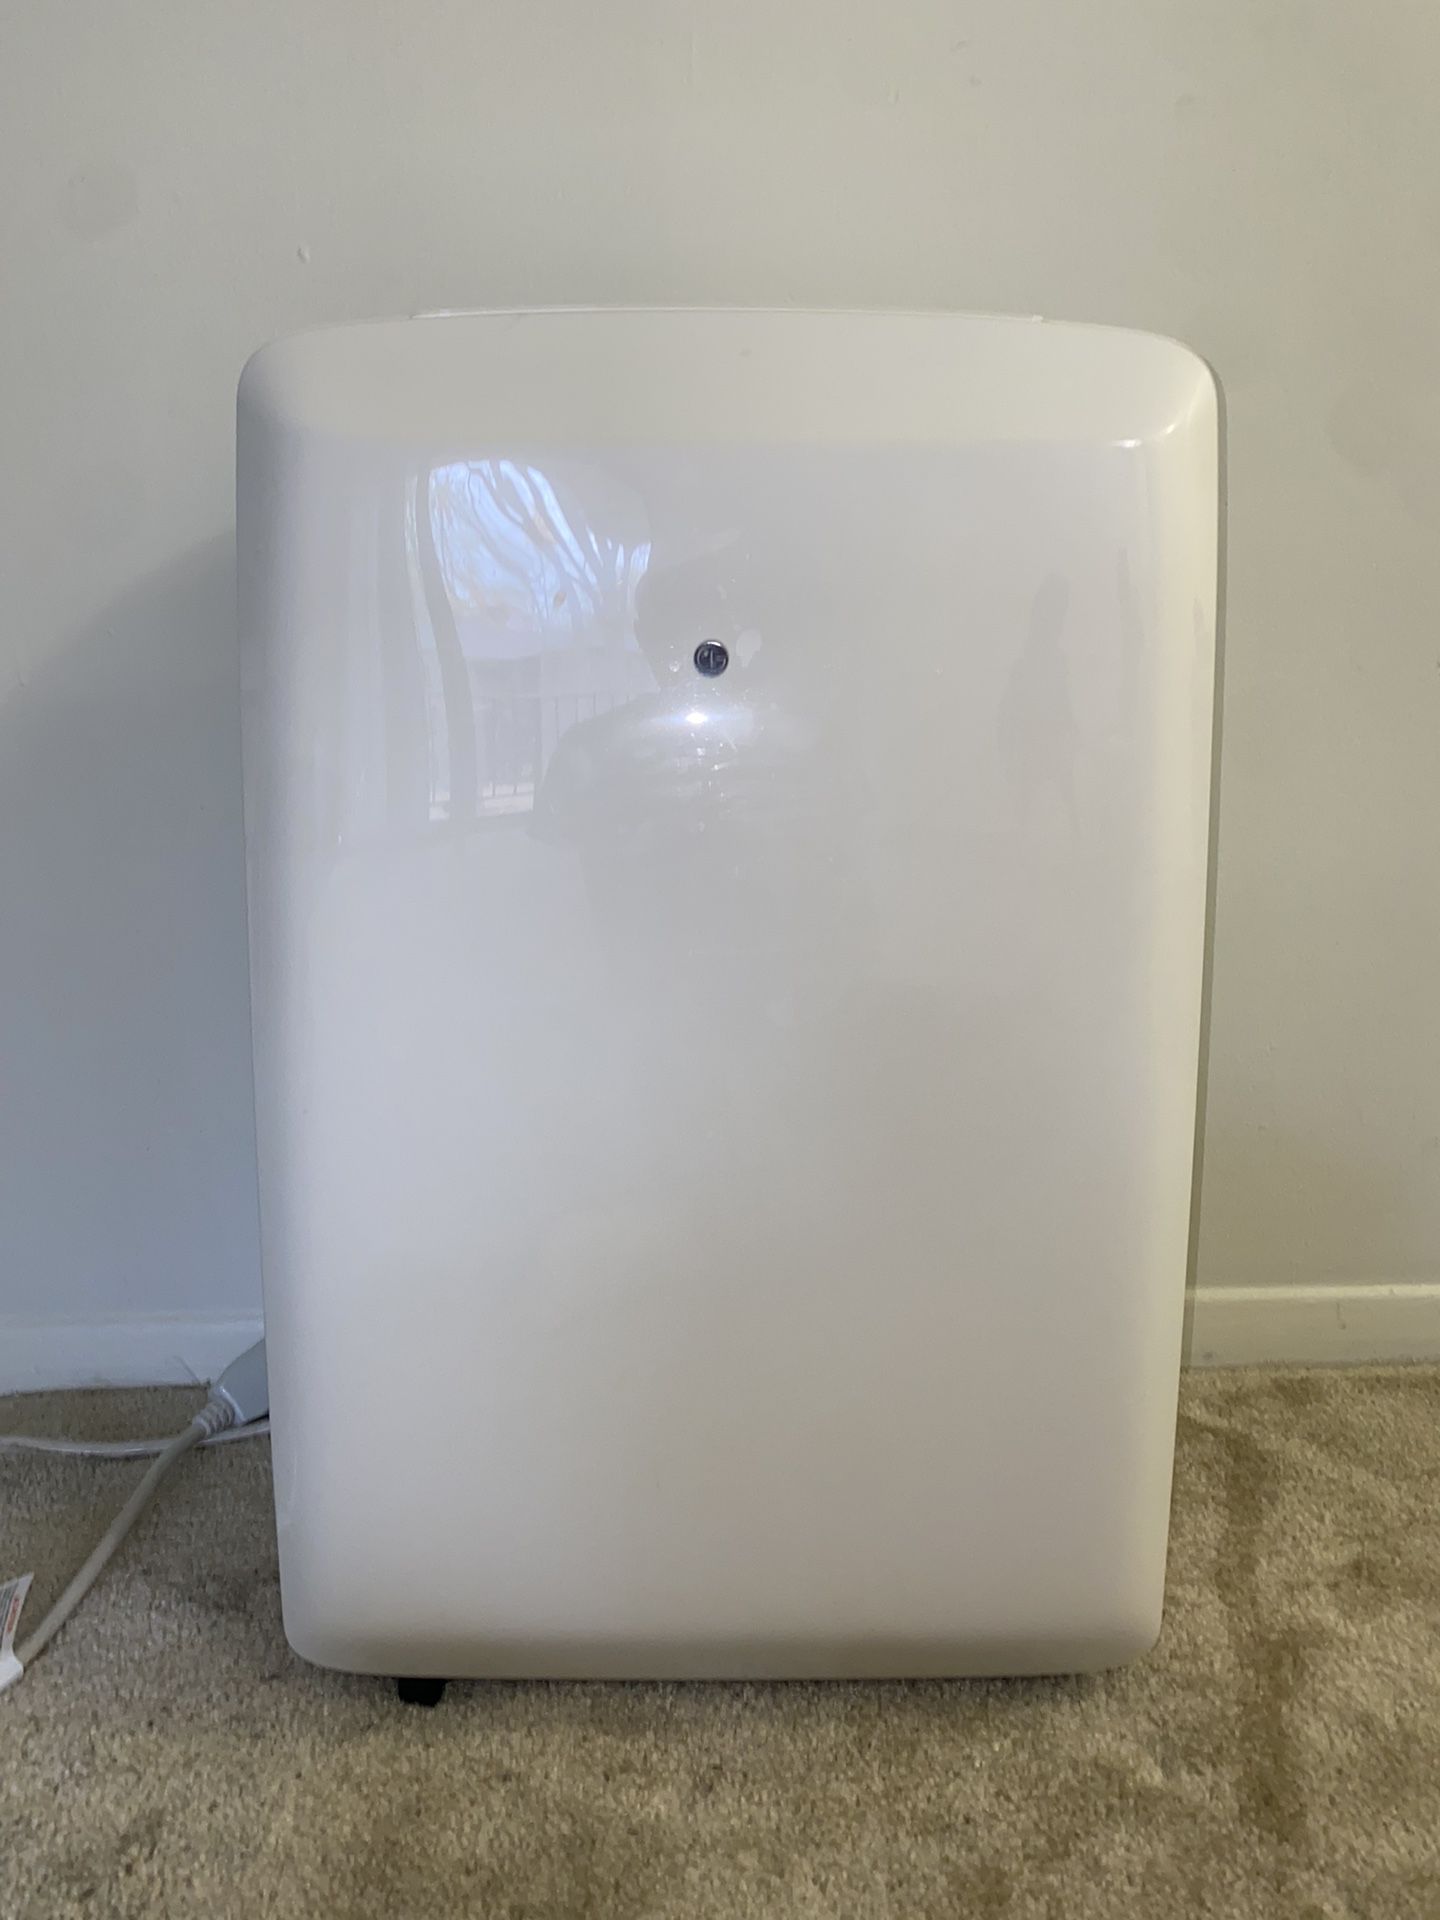 LG Portable Air Conditioner (8,000 BTU)